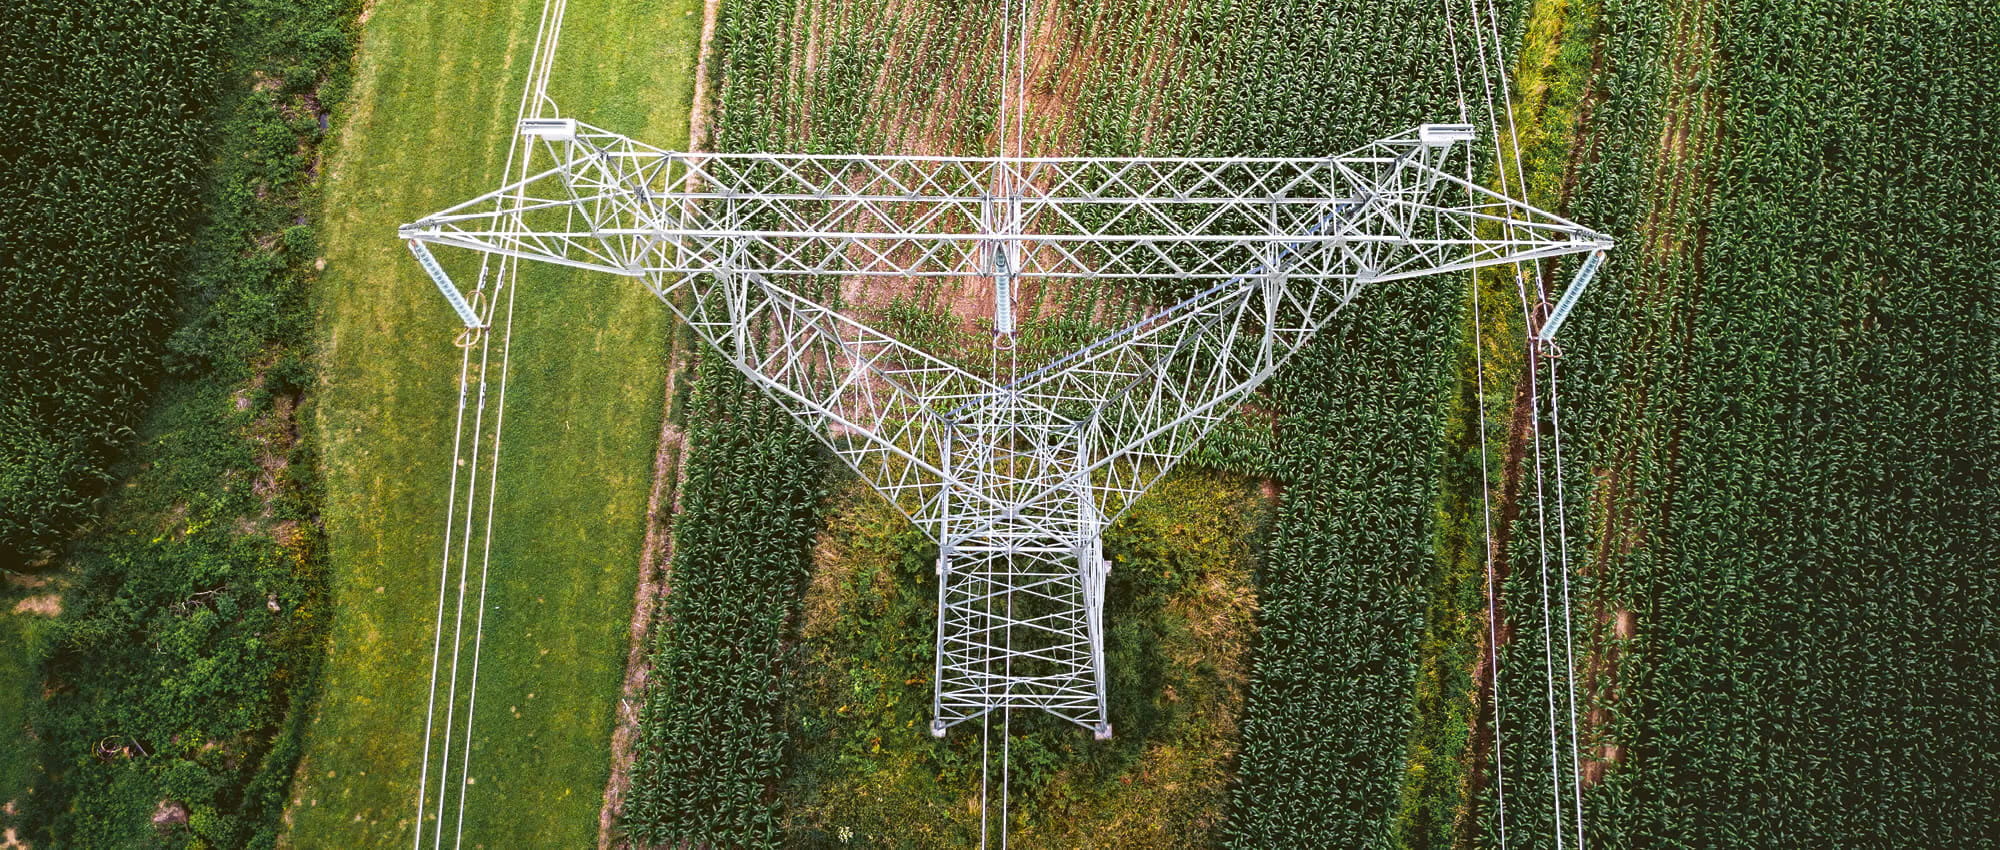 Overhead line mast in a green field. Copyright: iStock/Nejc Gostincar